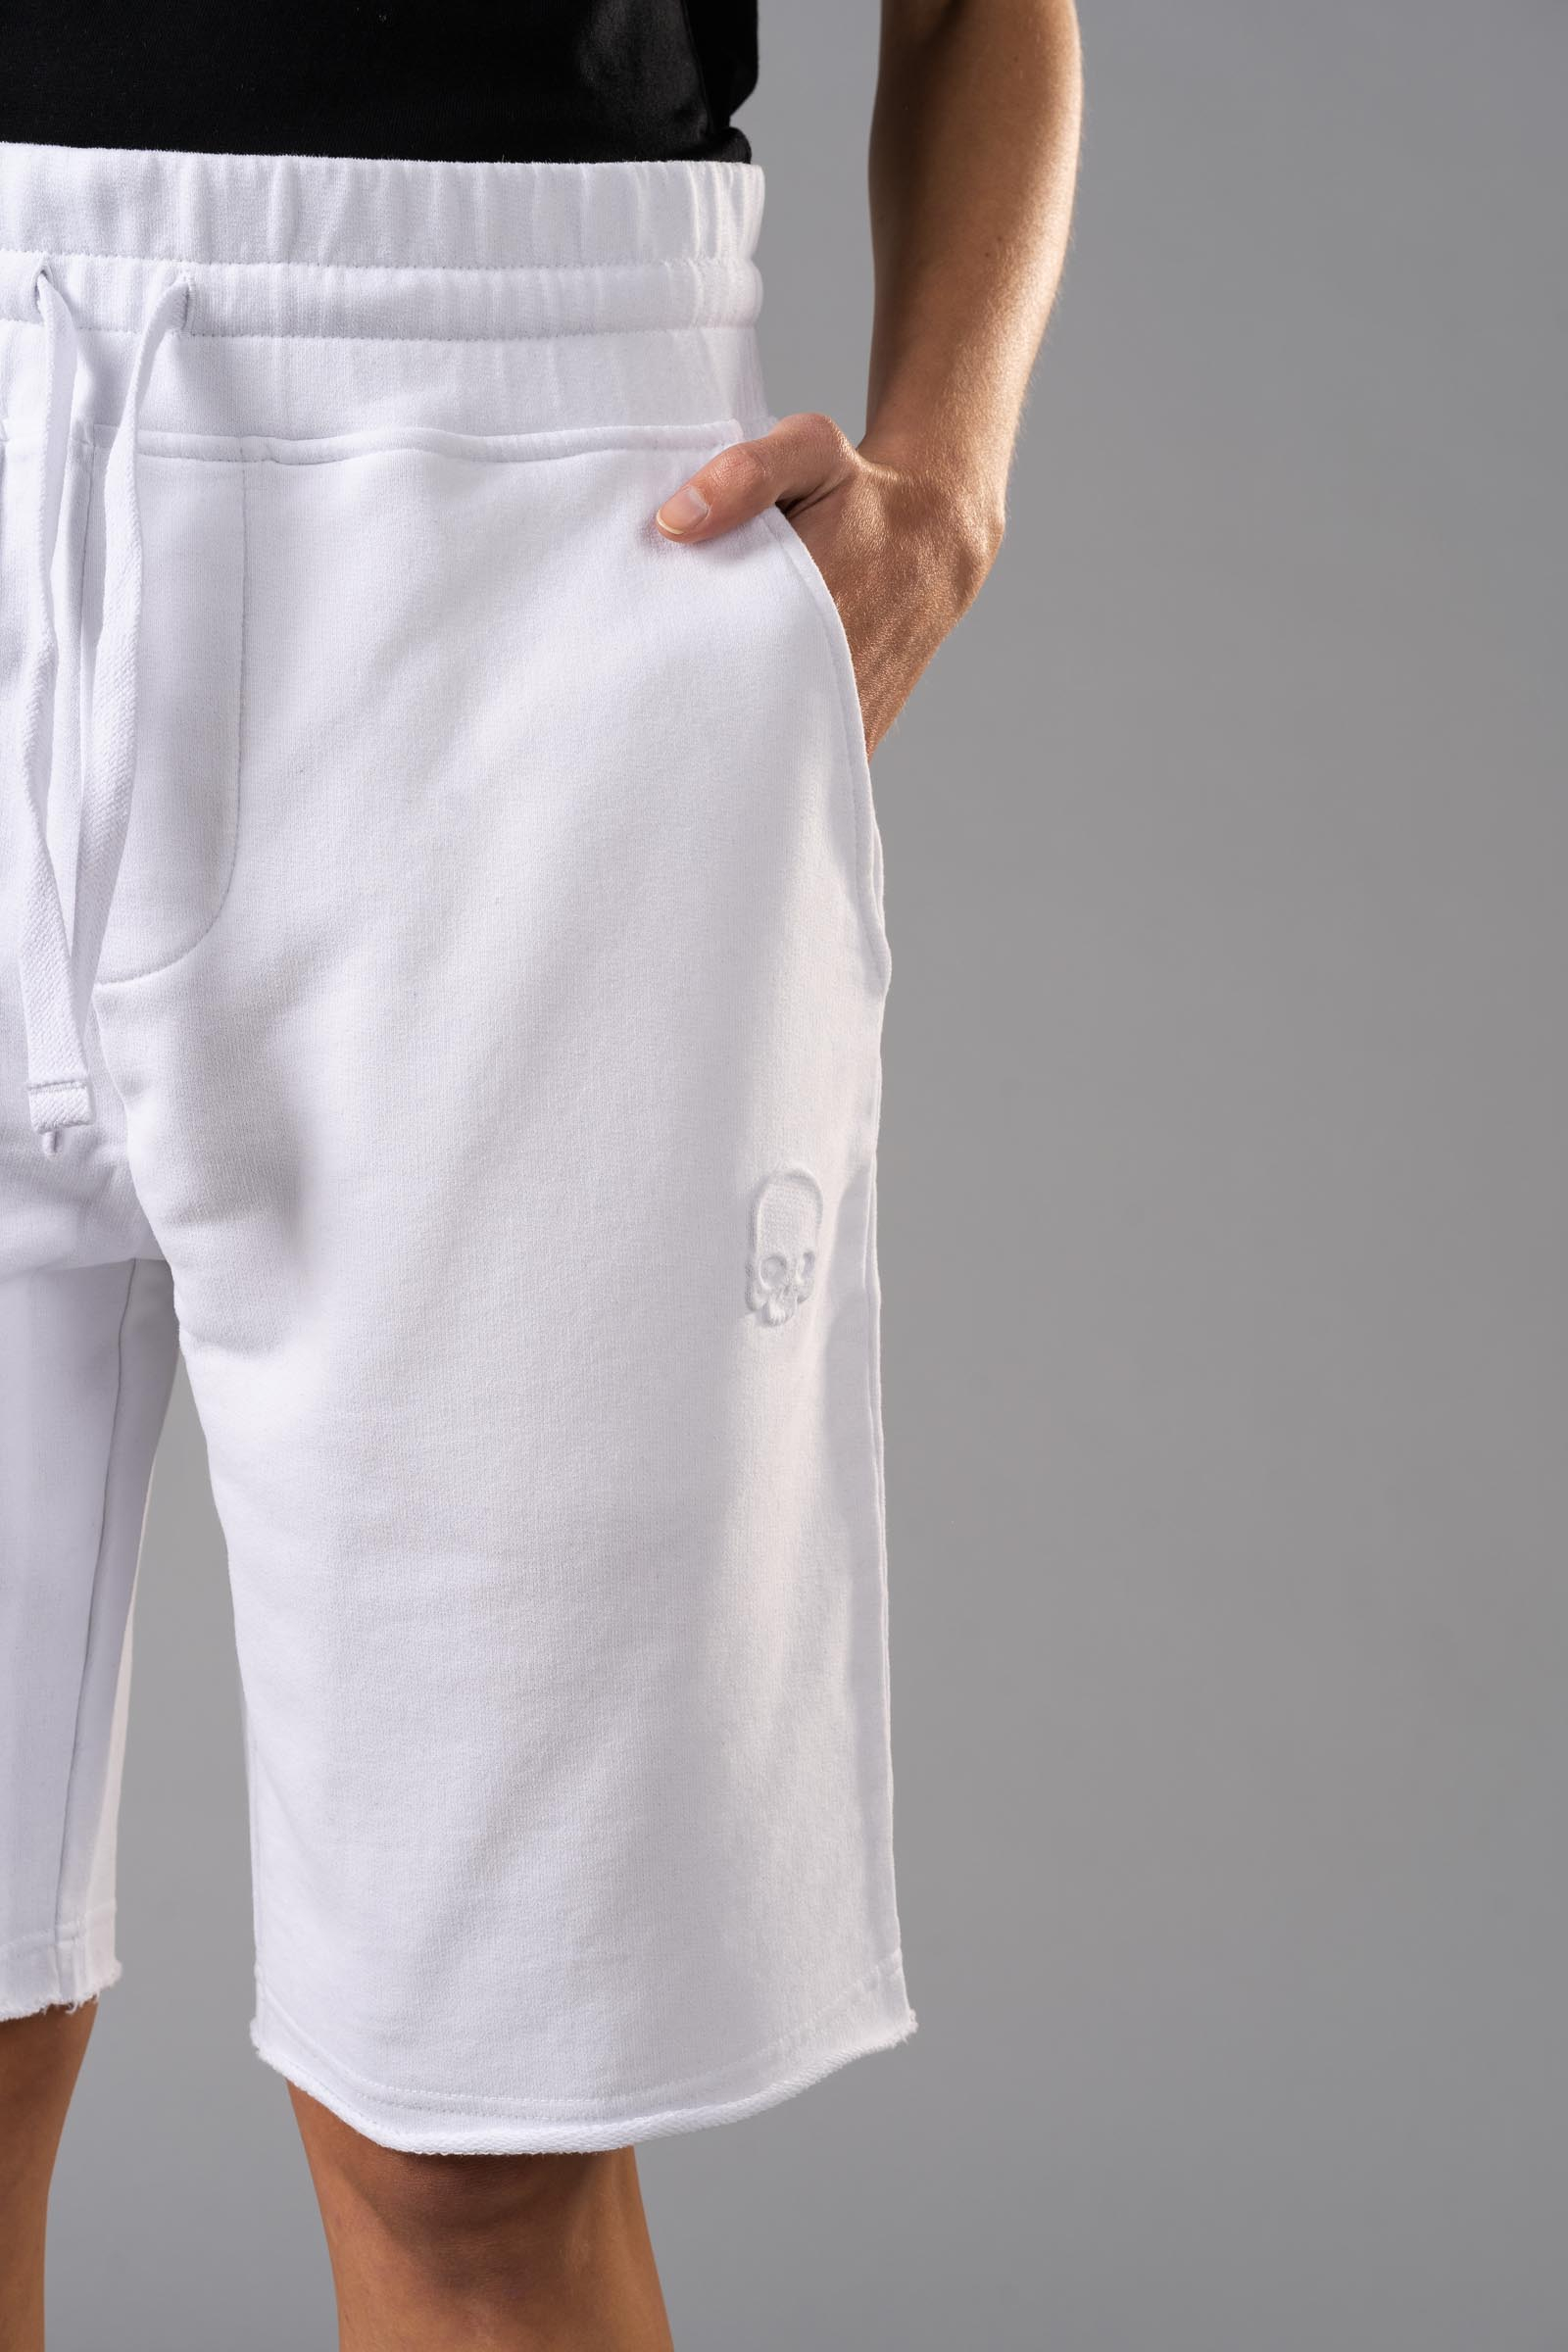 SKULL SHORTS - WHITE - Abbigliamento sportivo | Hydrogen